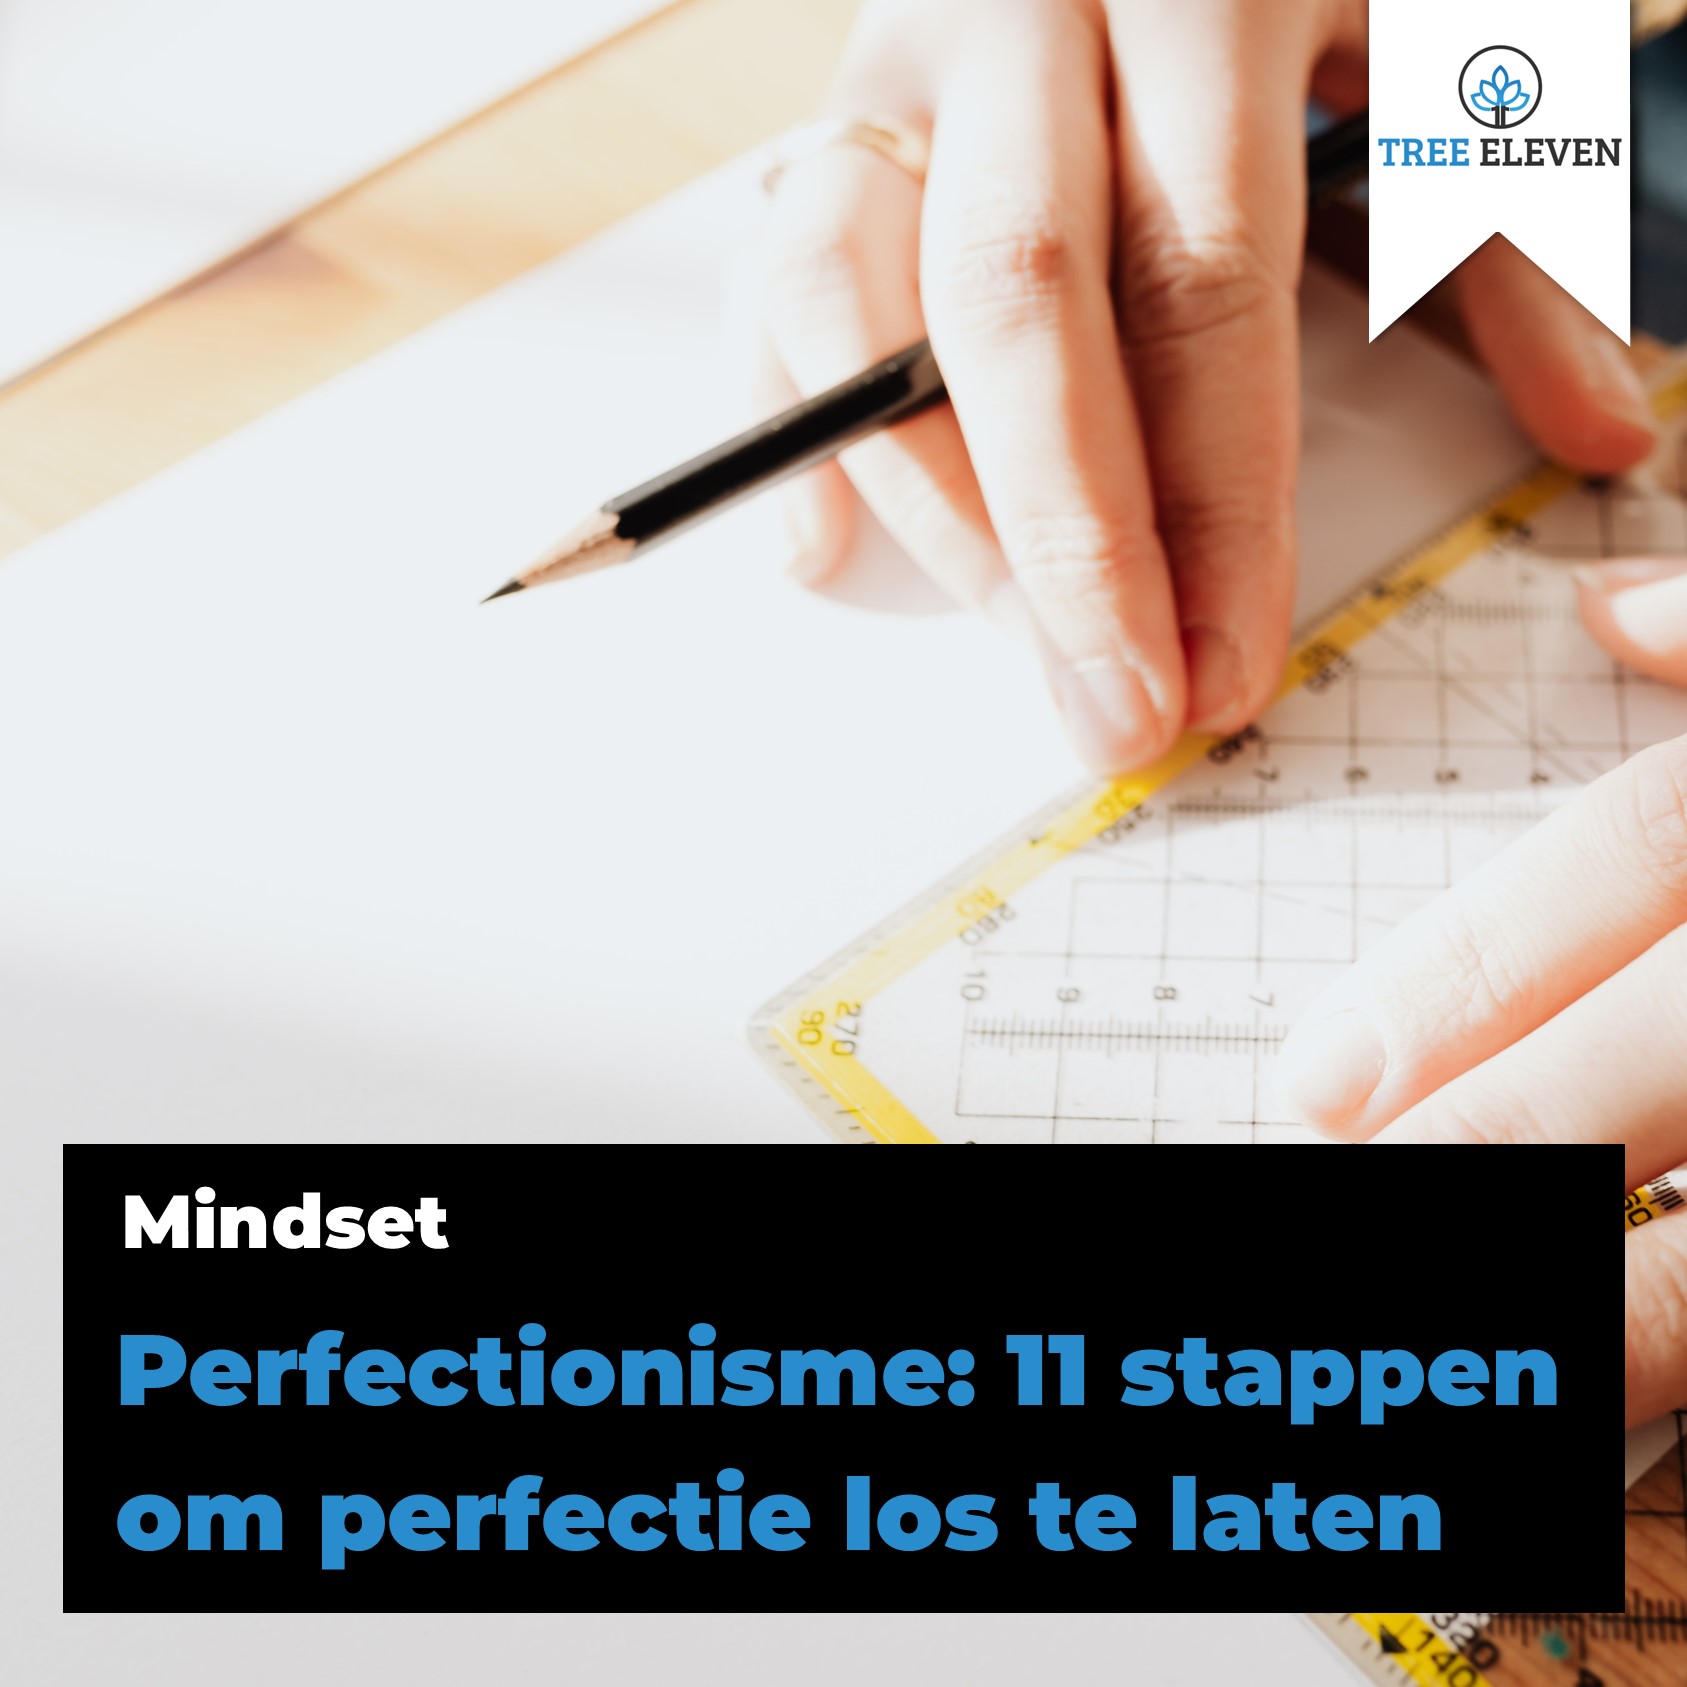 Perfectionisme: 11 stappen om perfectie los te laten